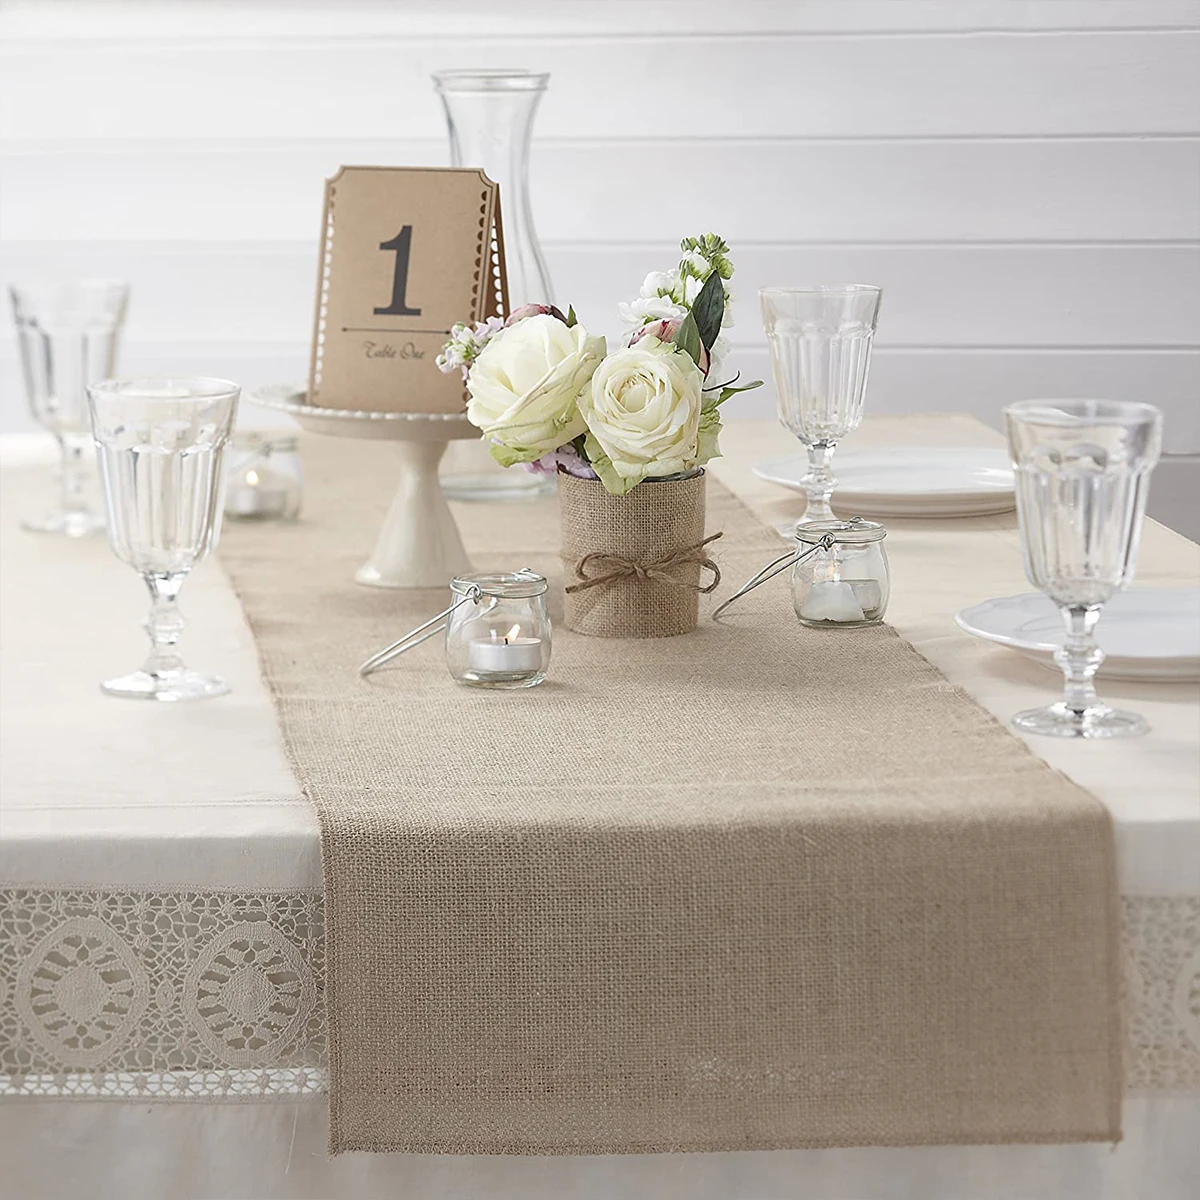 Camino de mesa de lino con punto vainica, camino de tela de lino estilo  rústico para bodas, fiestas, cocina, comedor, decoración natural, 14 x 108